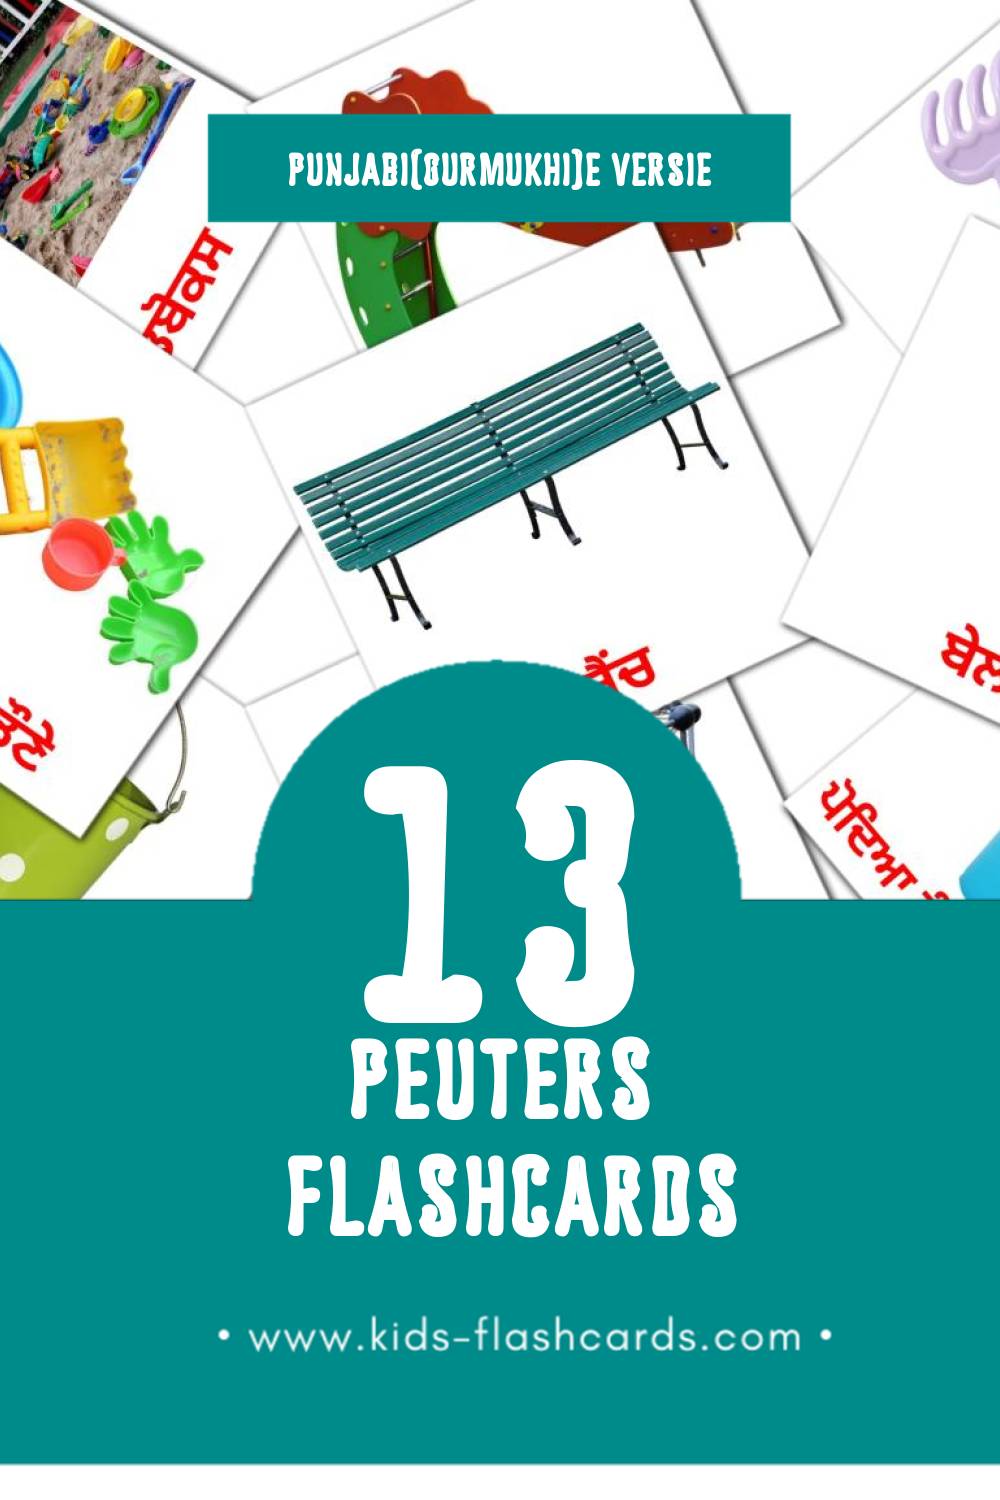 Visuele ਬੱਚਾ Flashcards voor Kleuters (13 kaarten in het Punjabi(gurmukhi))